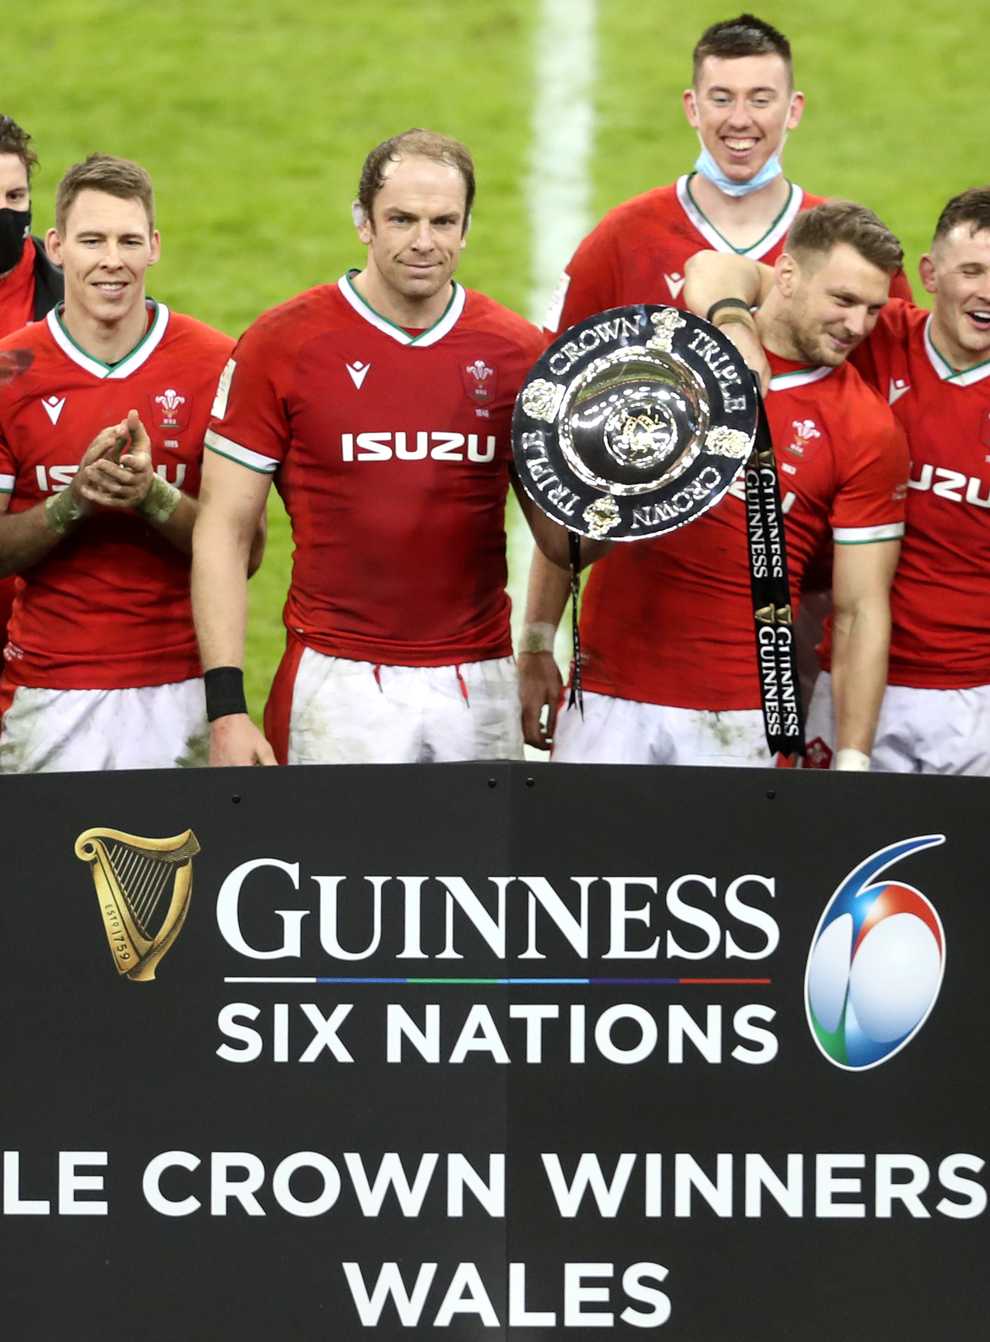 Wales celebrate winning the Six Nations triple crown